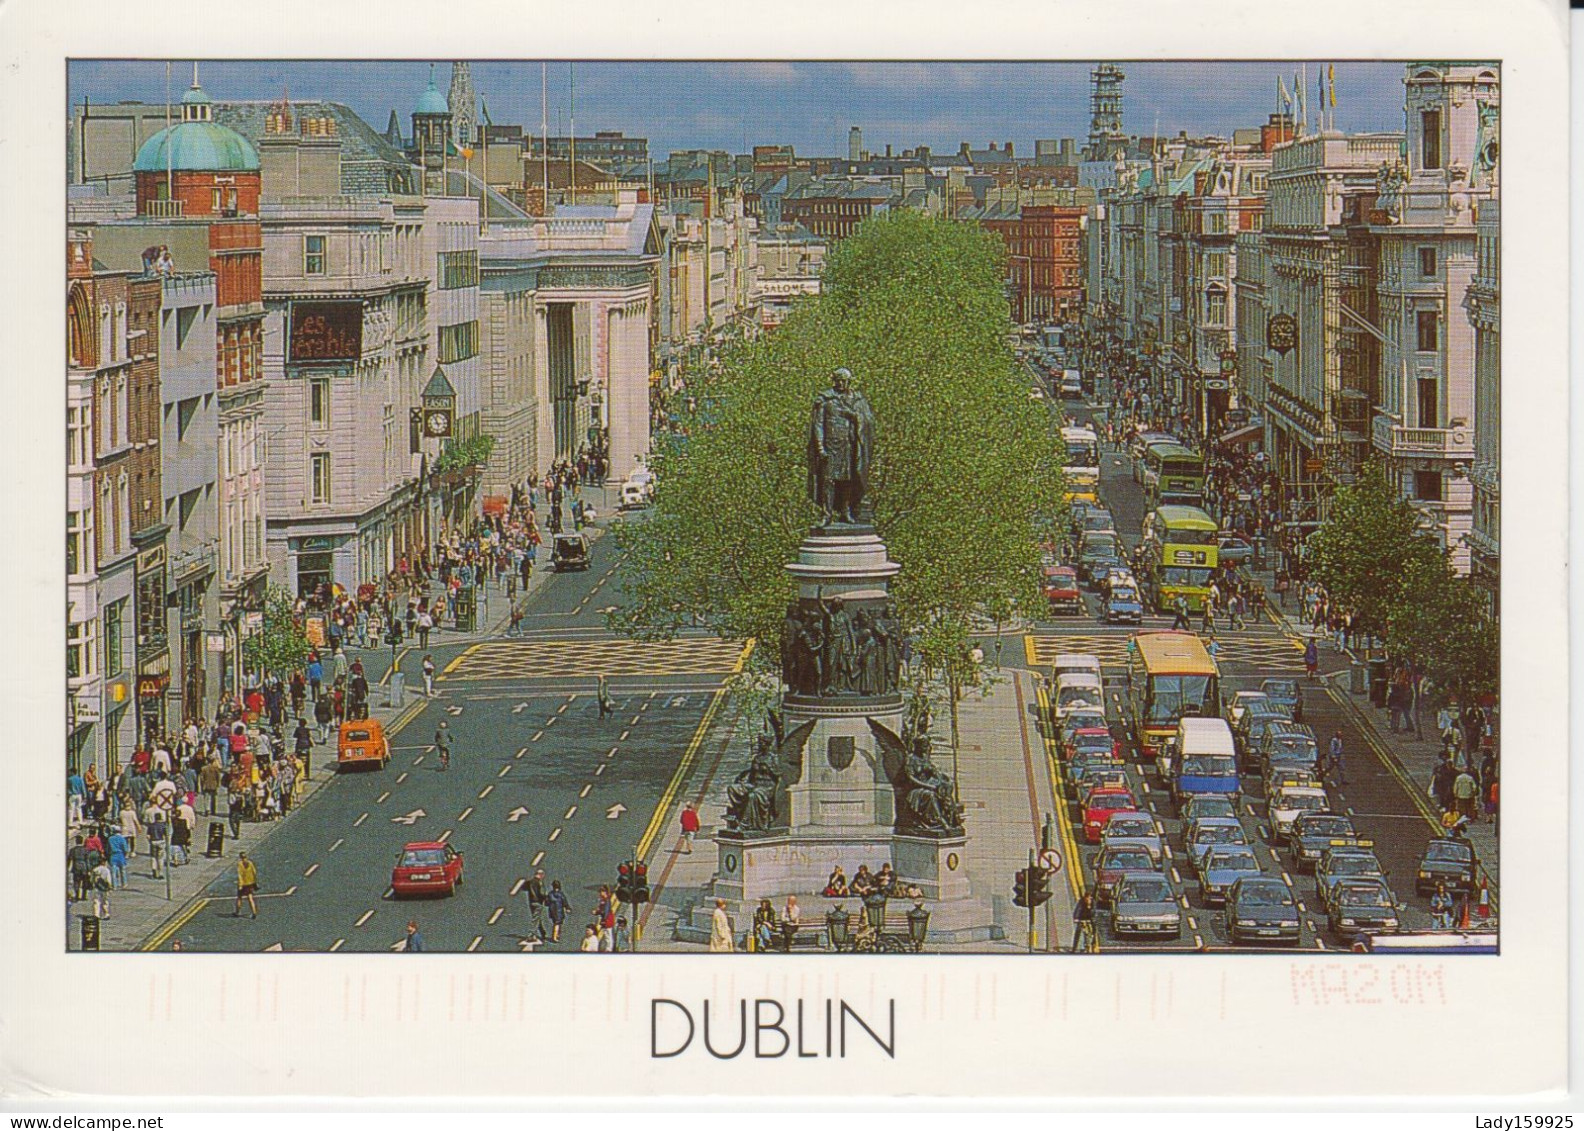 O'Connell Street Dublin,  Bronze Monument Daniel O'Connell Cylindrical Pedestal 3 Traffic Lanes On Each Side  Animat2 Sc - Dublin